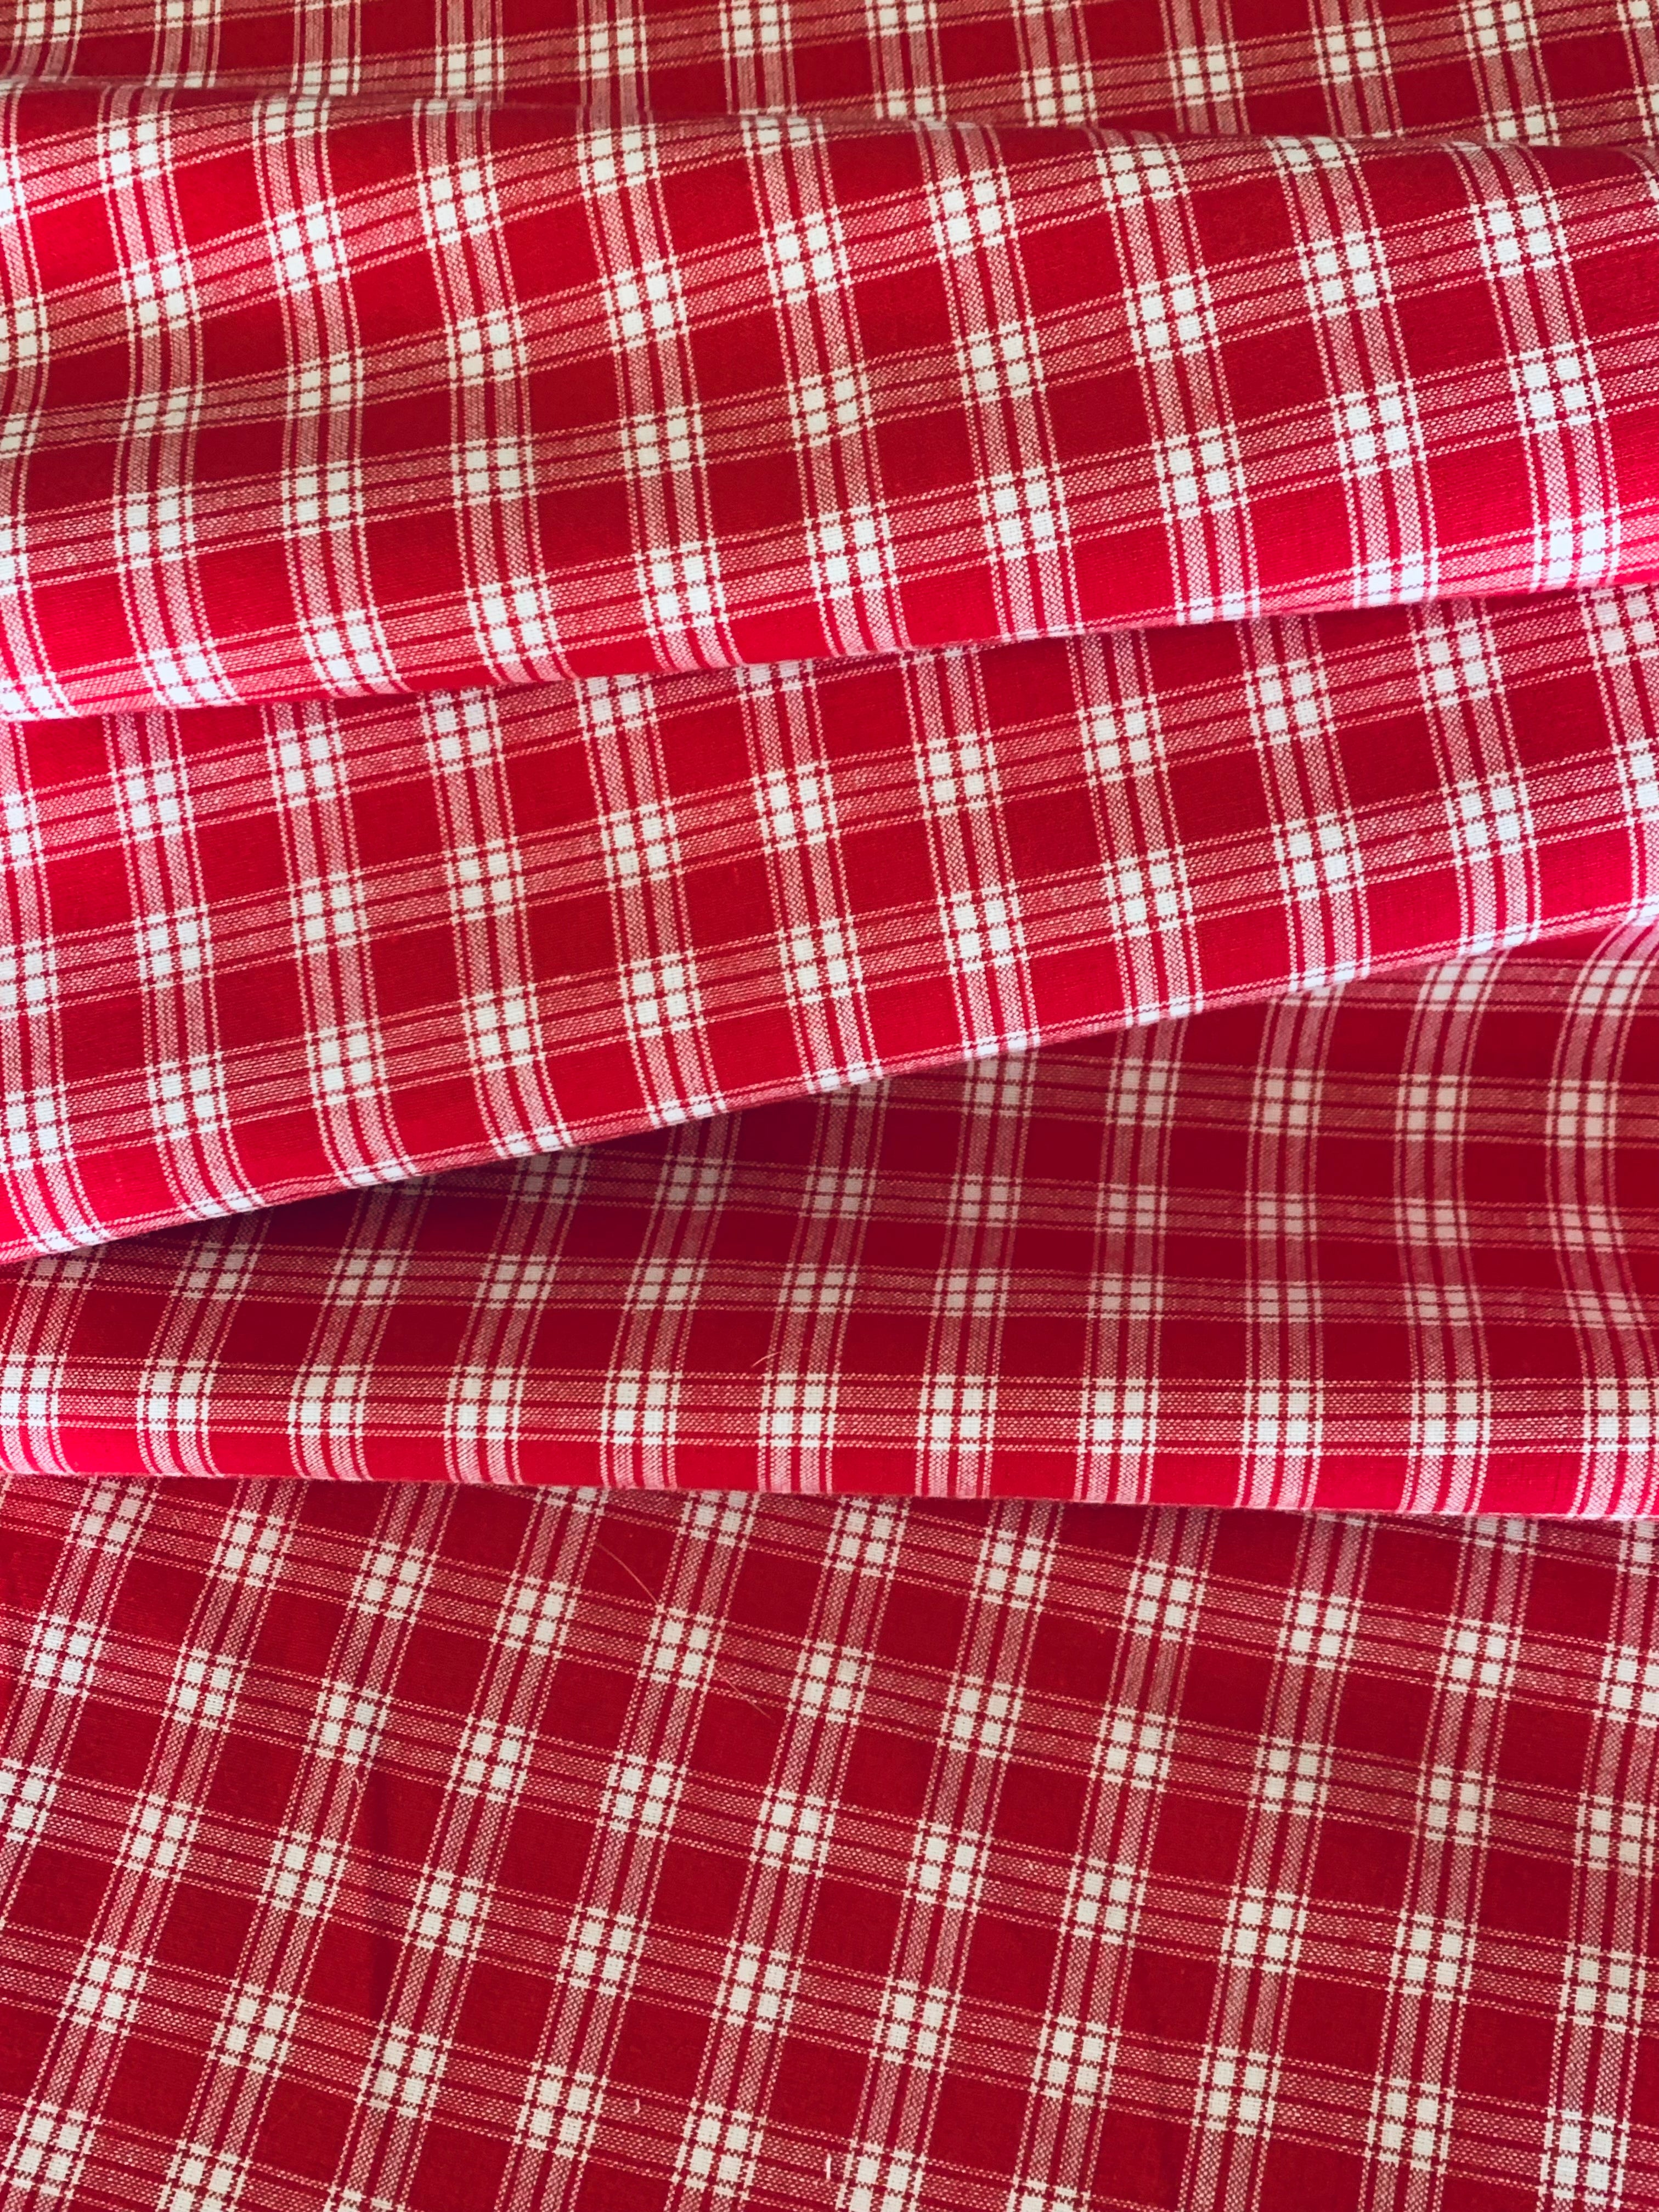 Red and White Homespun Cotton Fabric